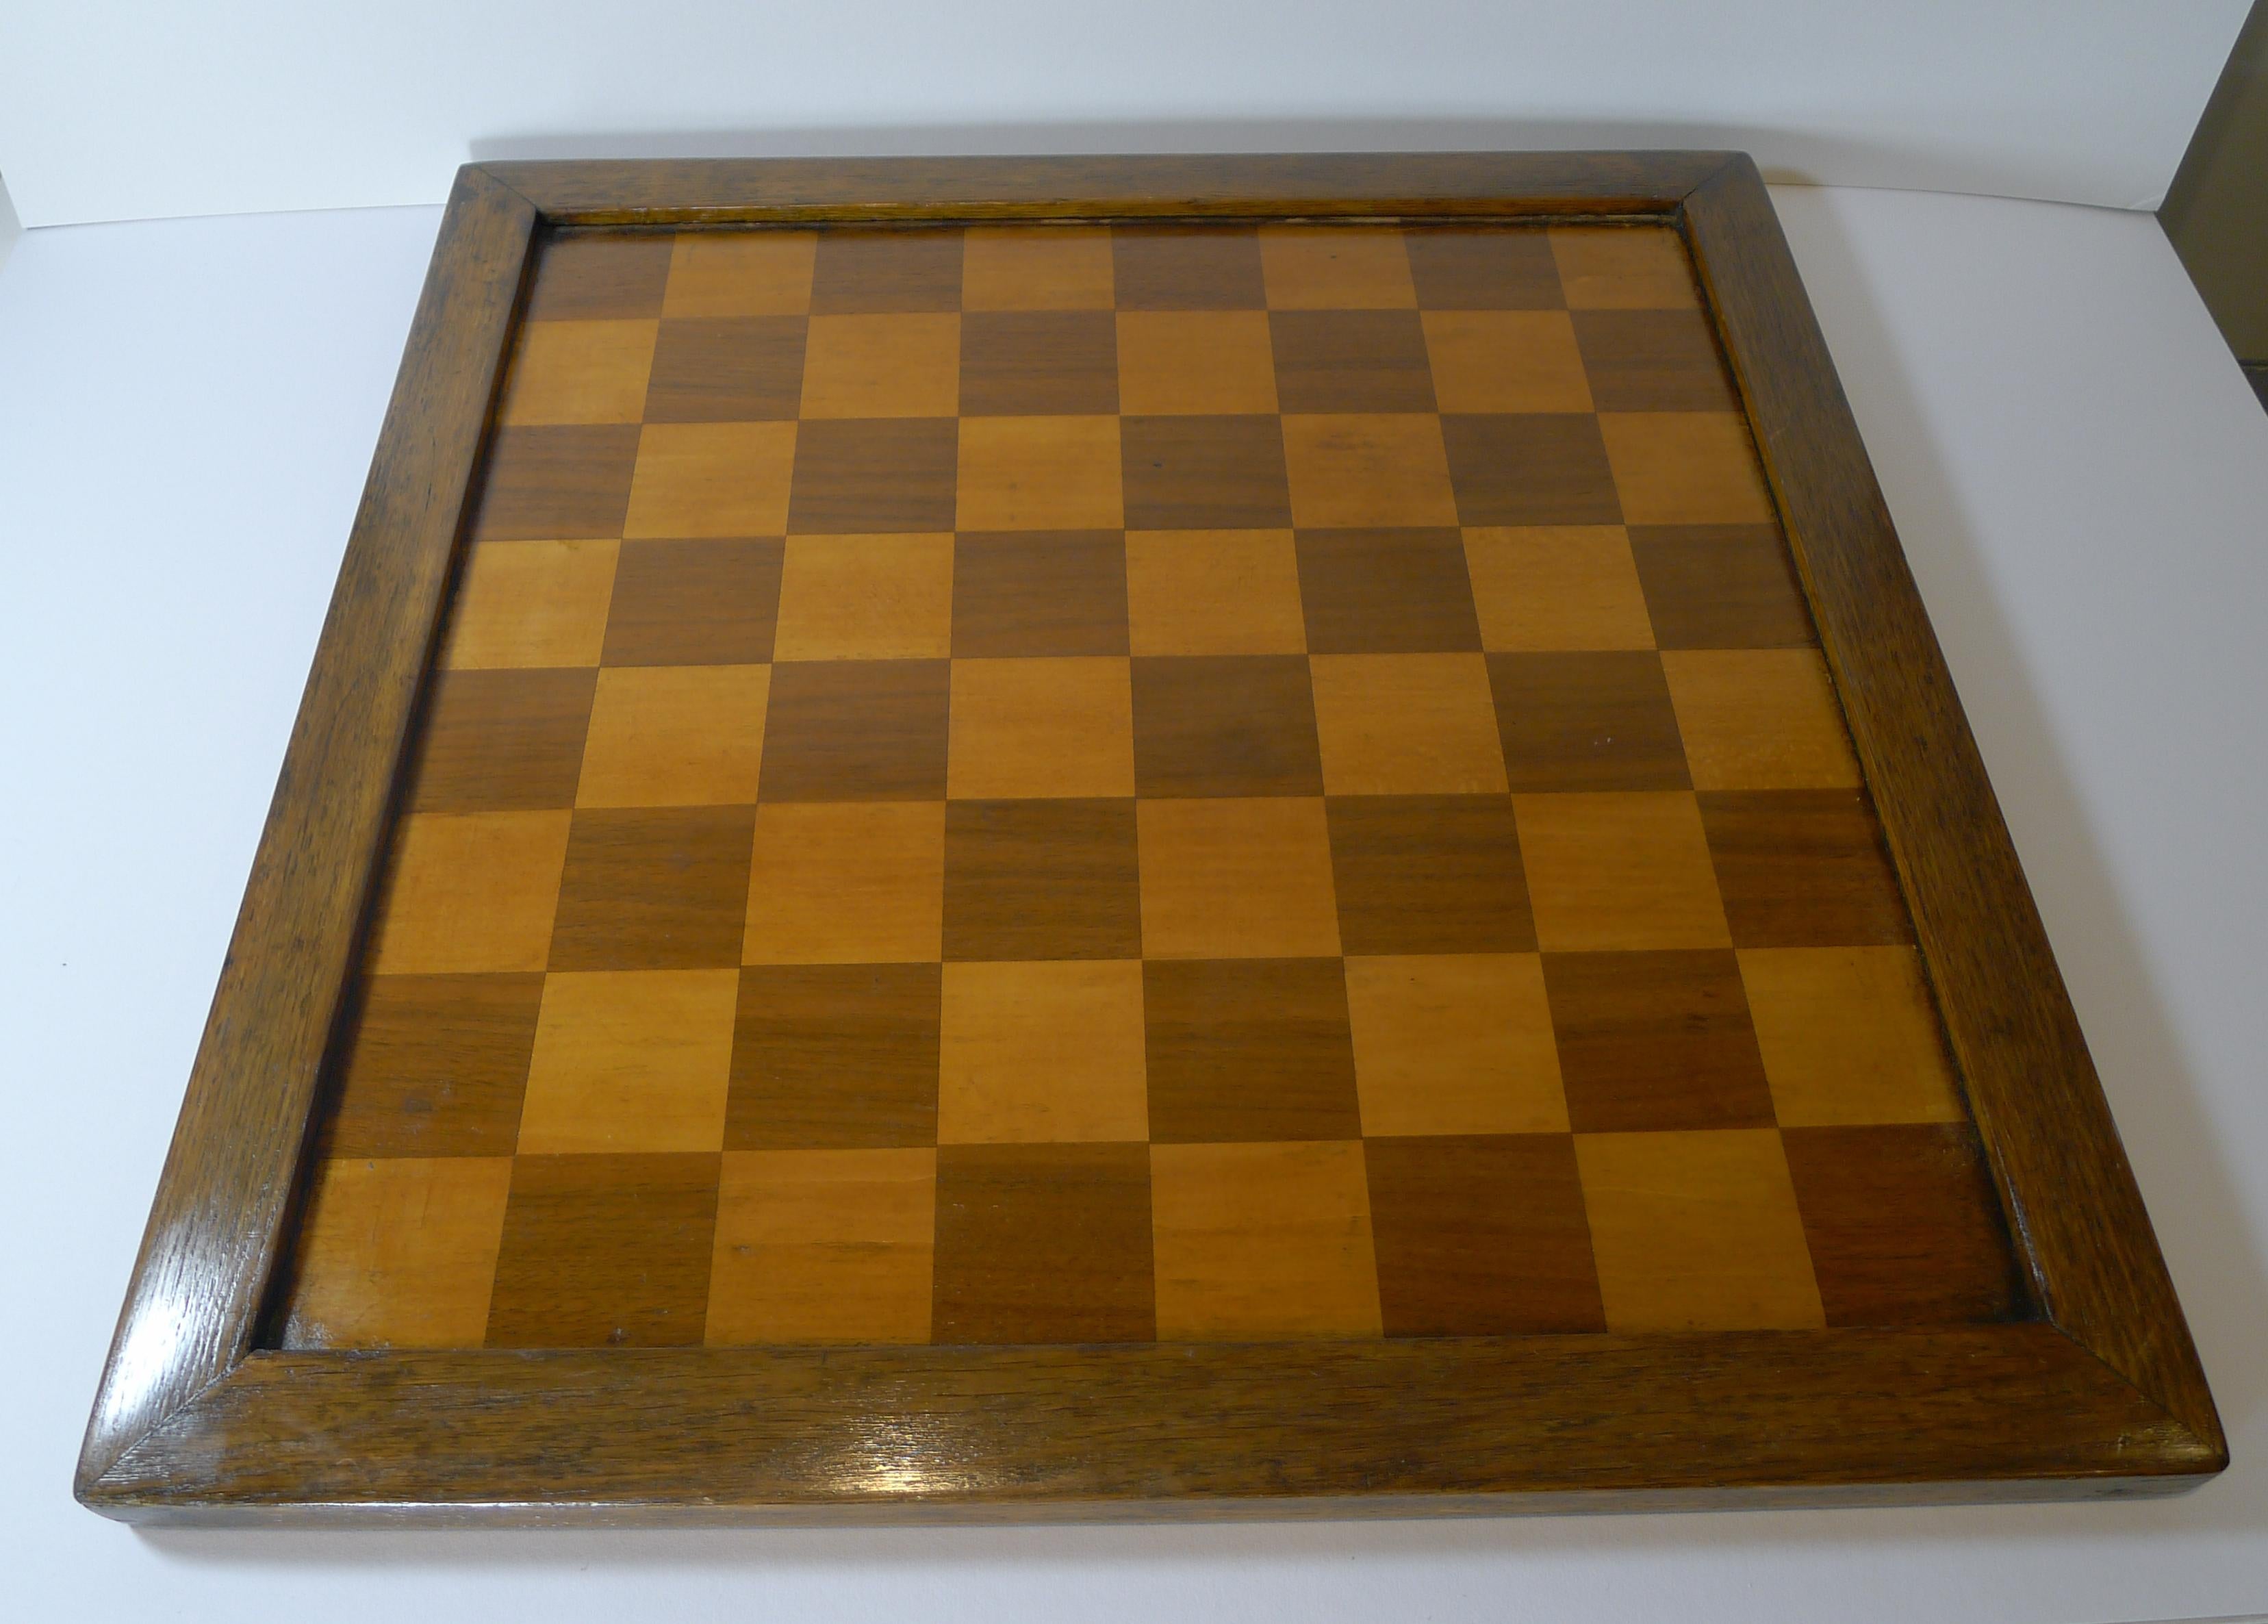 Edwardian Large Antique English Chess Board / Jeu Des Dames, c.1900